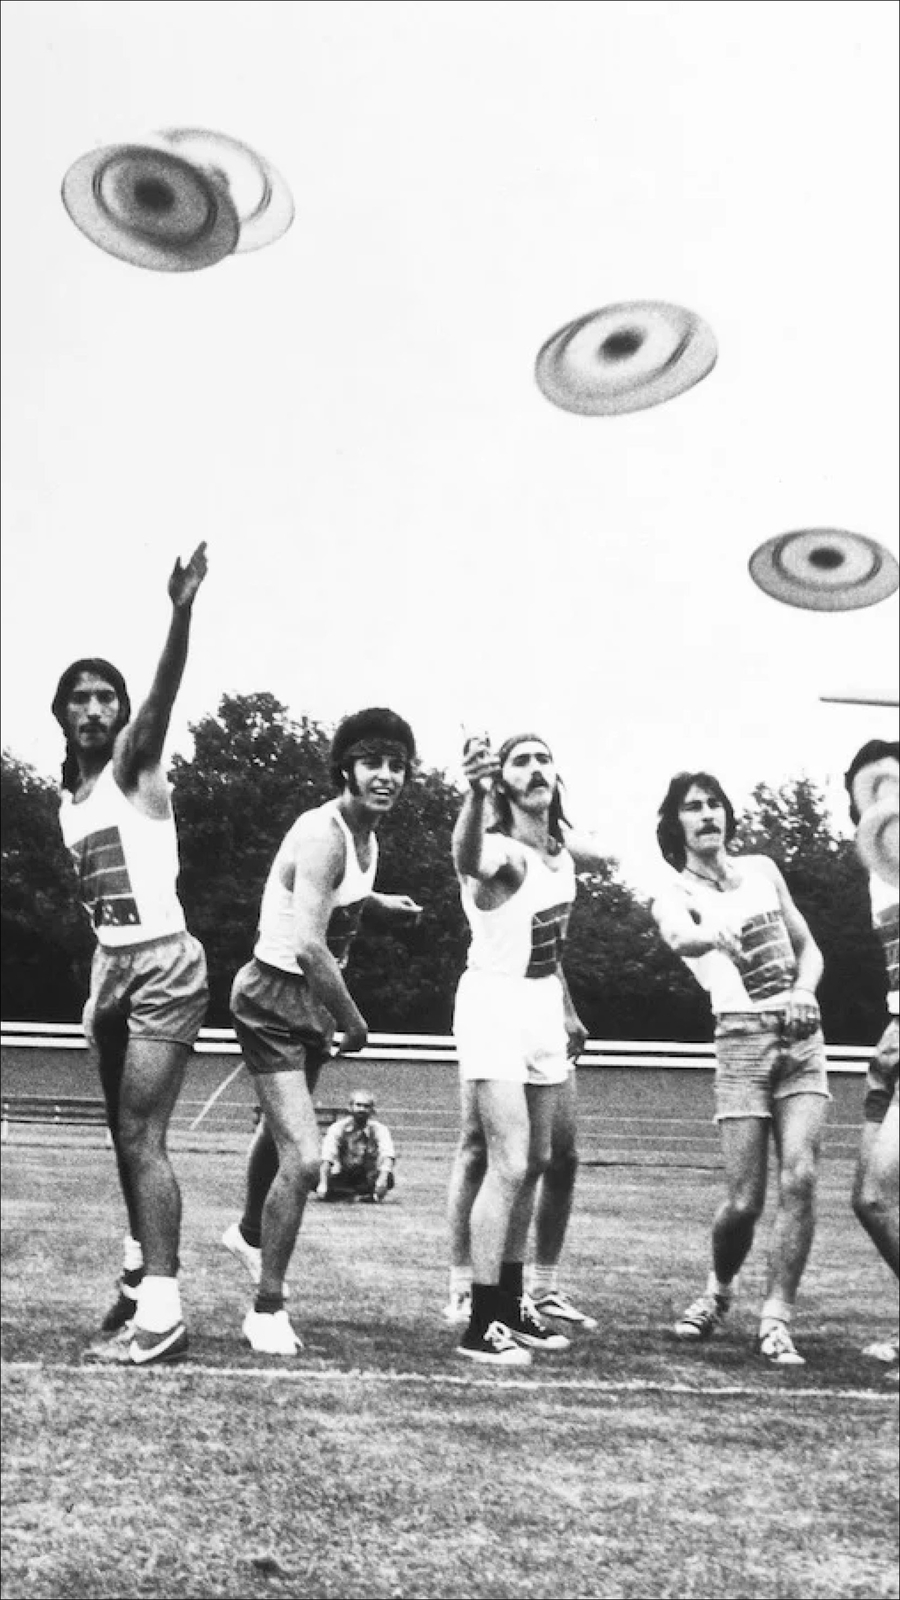 Frisbee - is throwing a frisbee a sport | Atollon - a design company